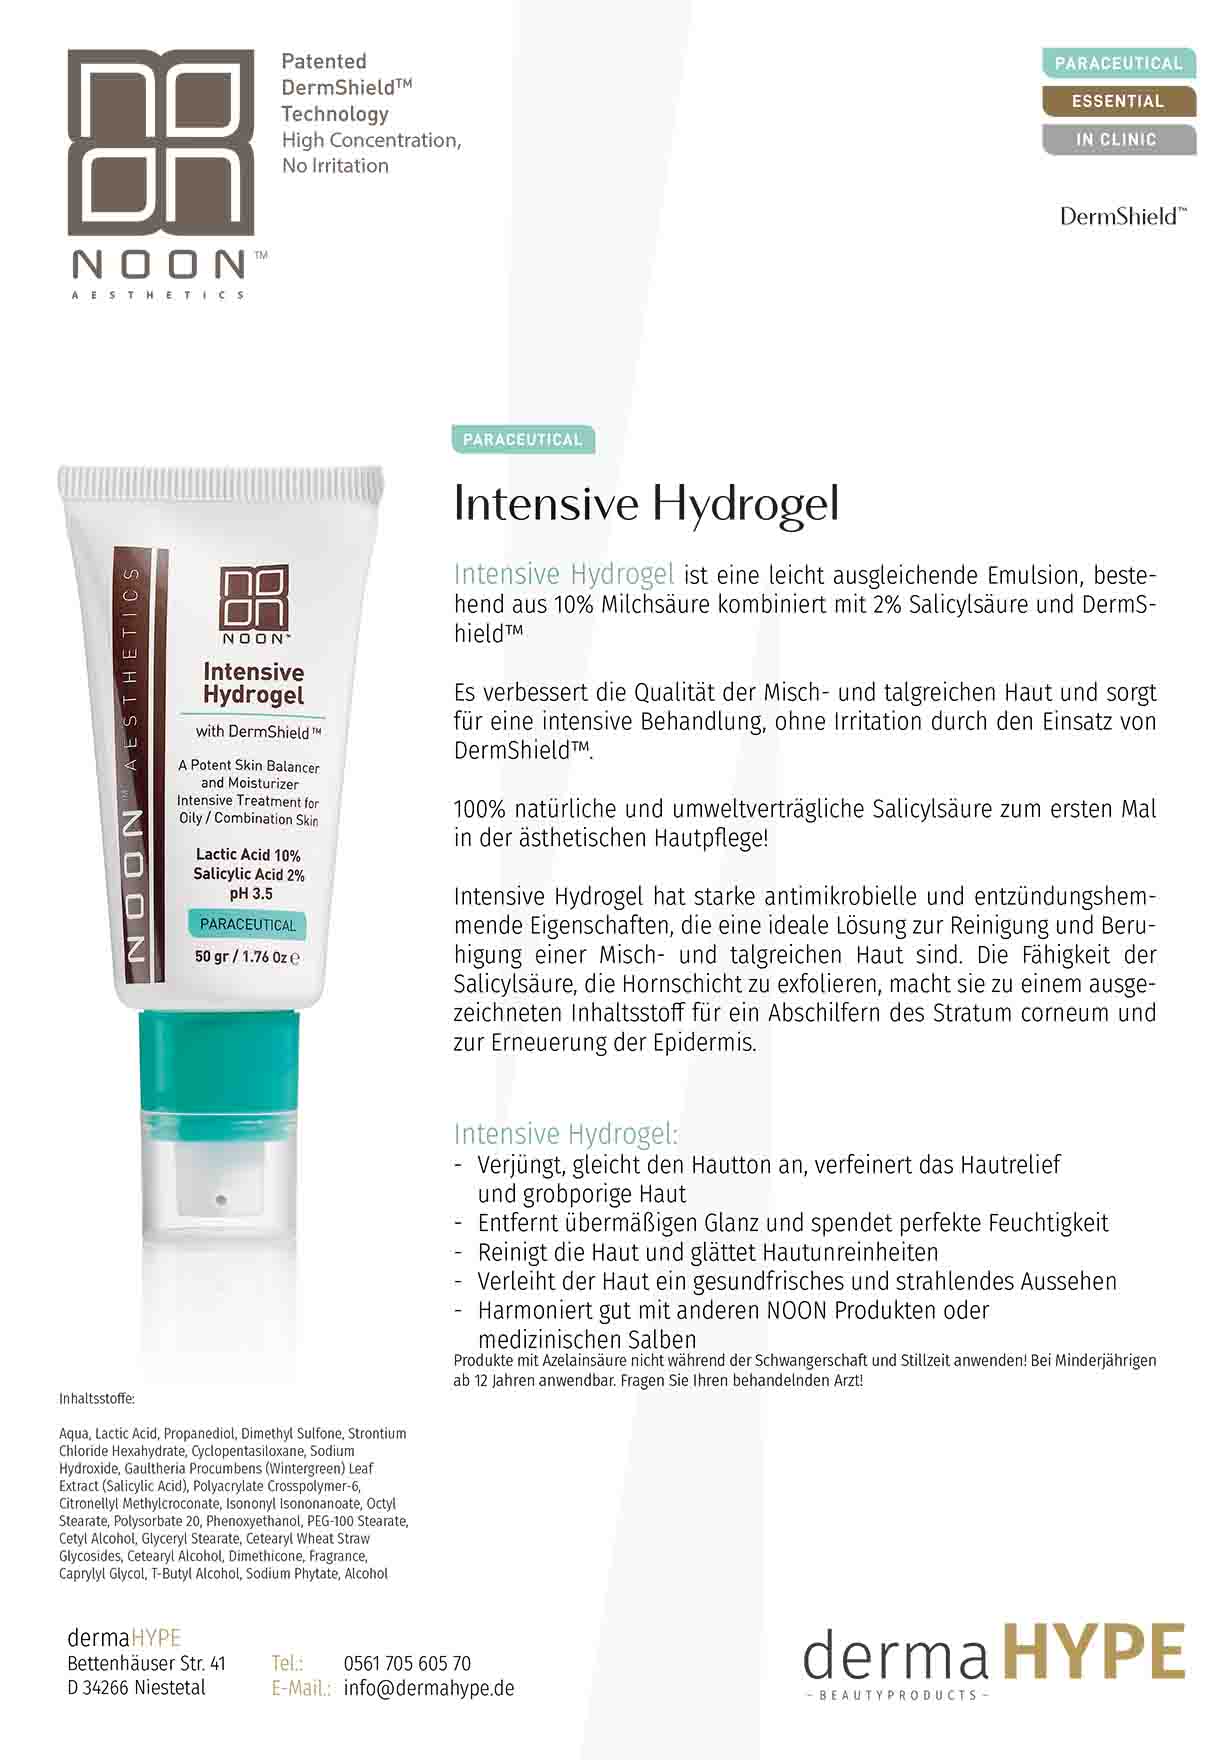 Intensive Hydrogel leaflet | Yuliskin Kosmetik Studio